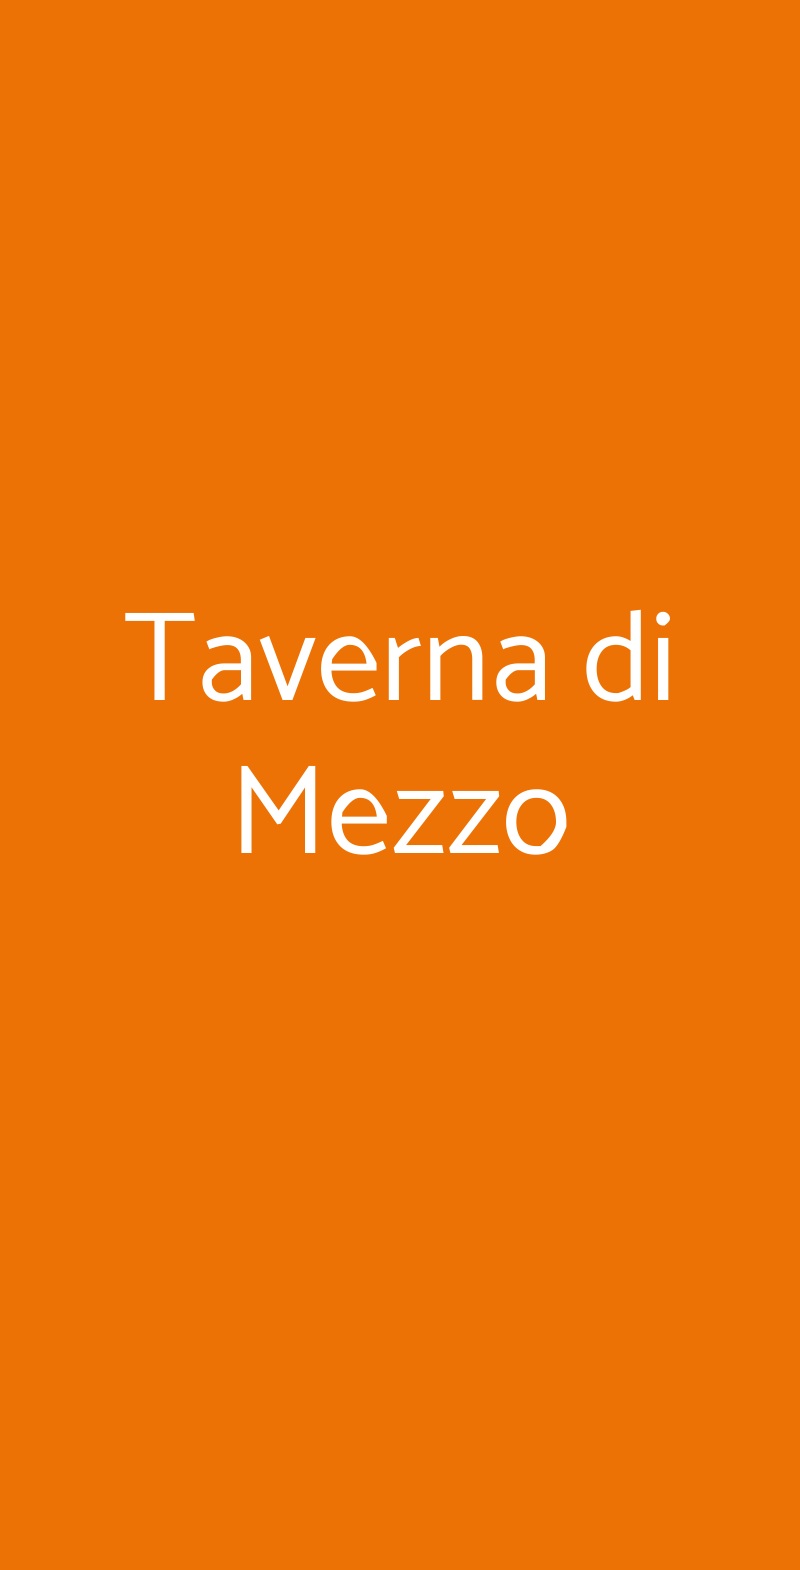 Taverna di Mezzo Forli menù 1 pagina